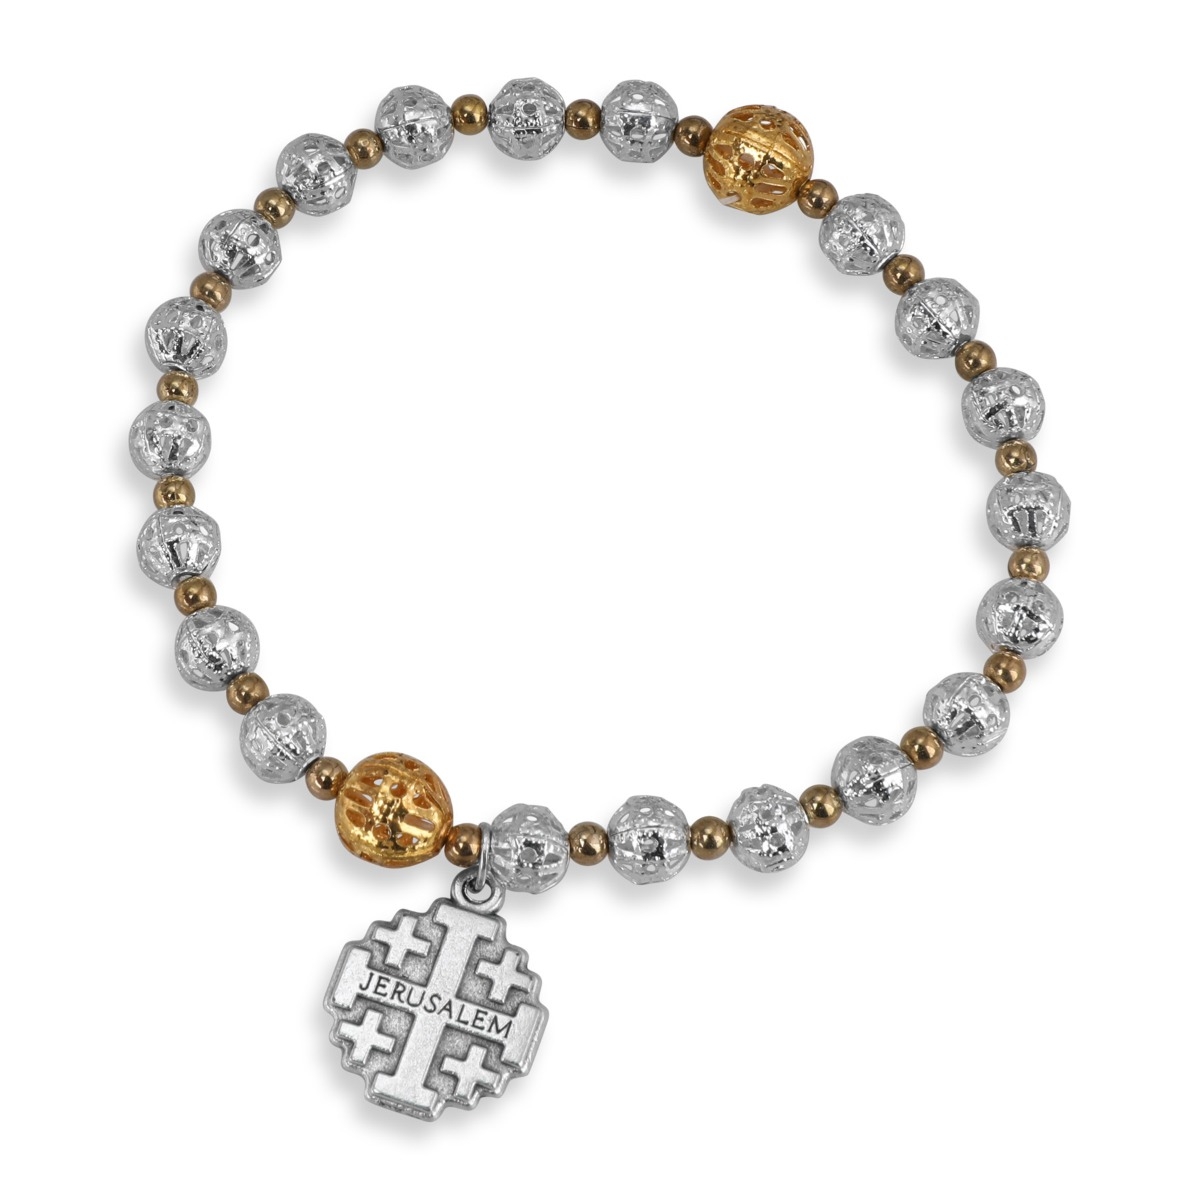 Holyland Rosary Two-Toned Beaded Rosary Bracelet With Jerusalem Cross Charm - 1